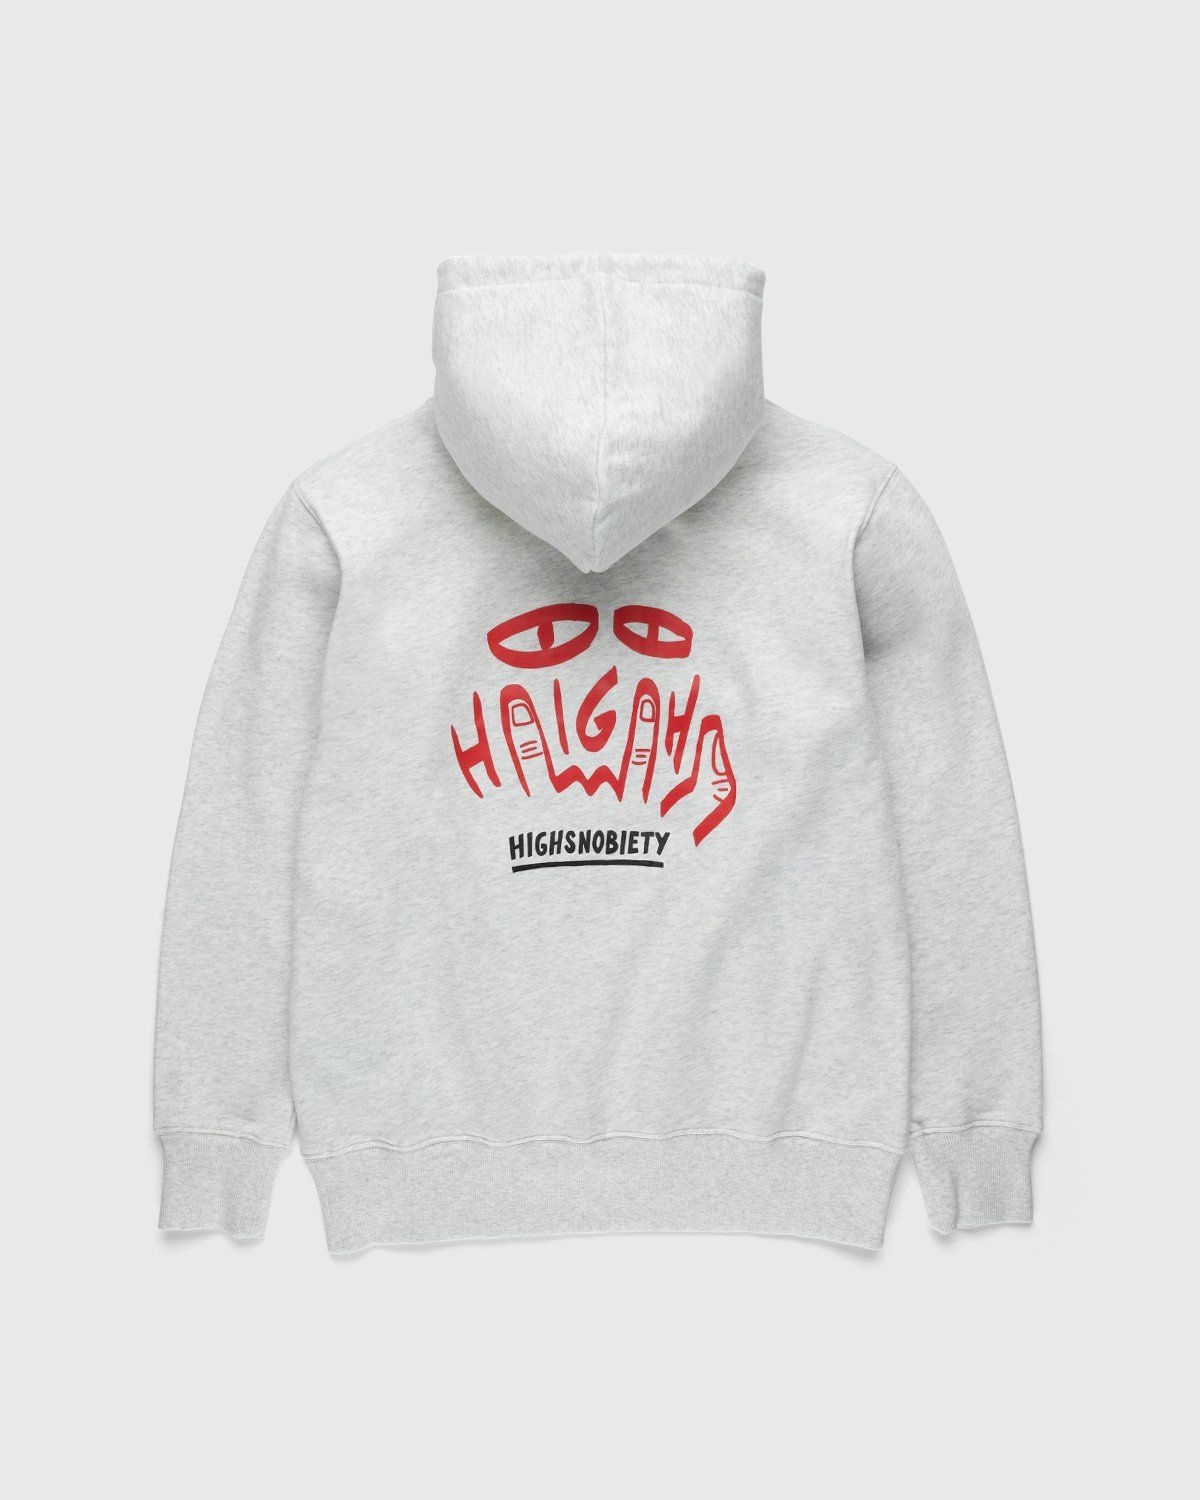 KARMA8A x Highsnobiety – HS Sports High Hoodie White - Sweats - White - Image 1